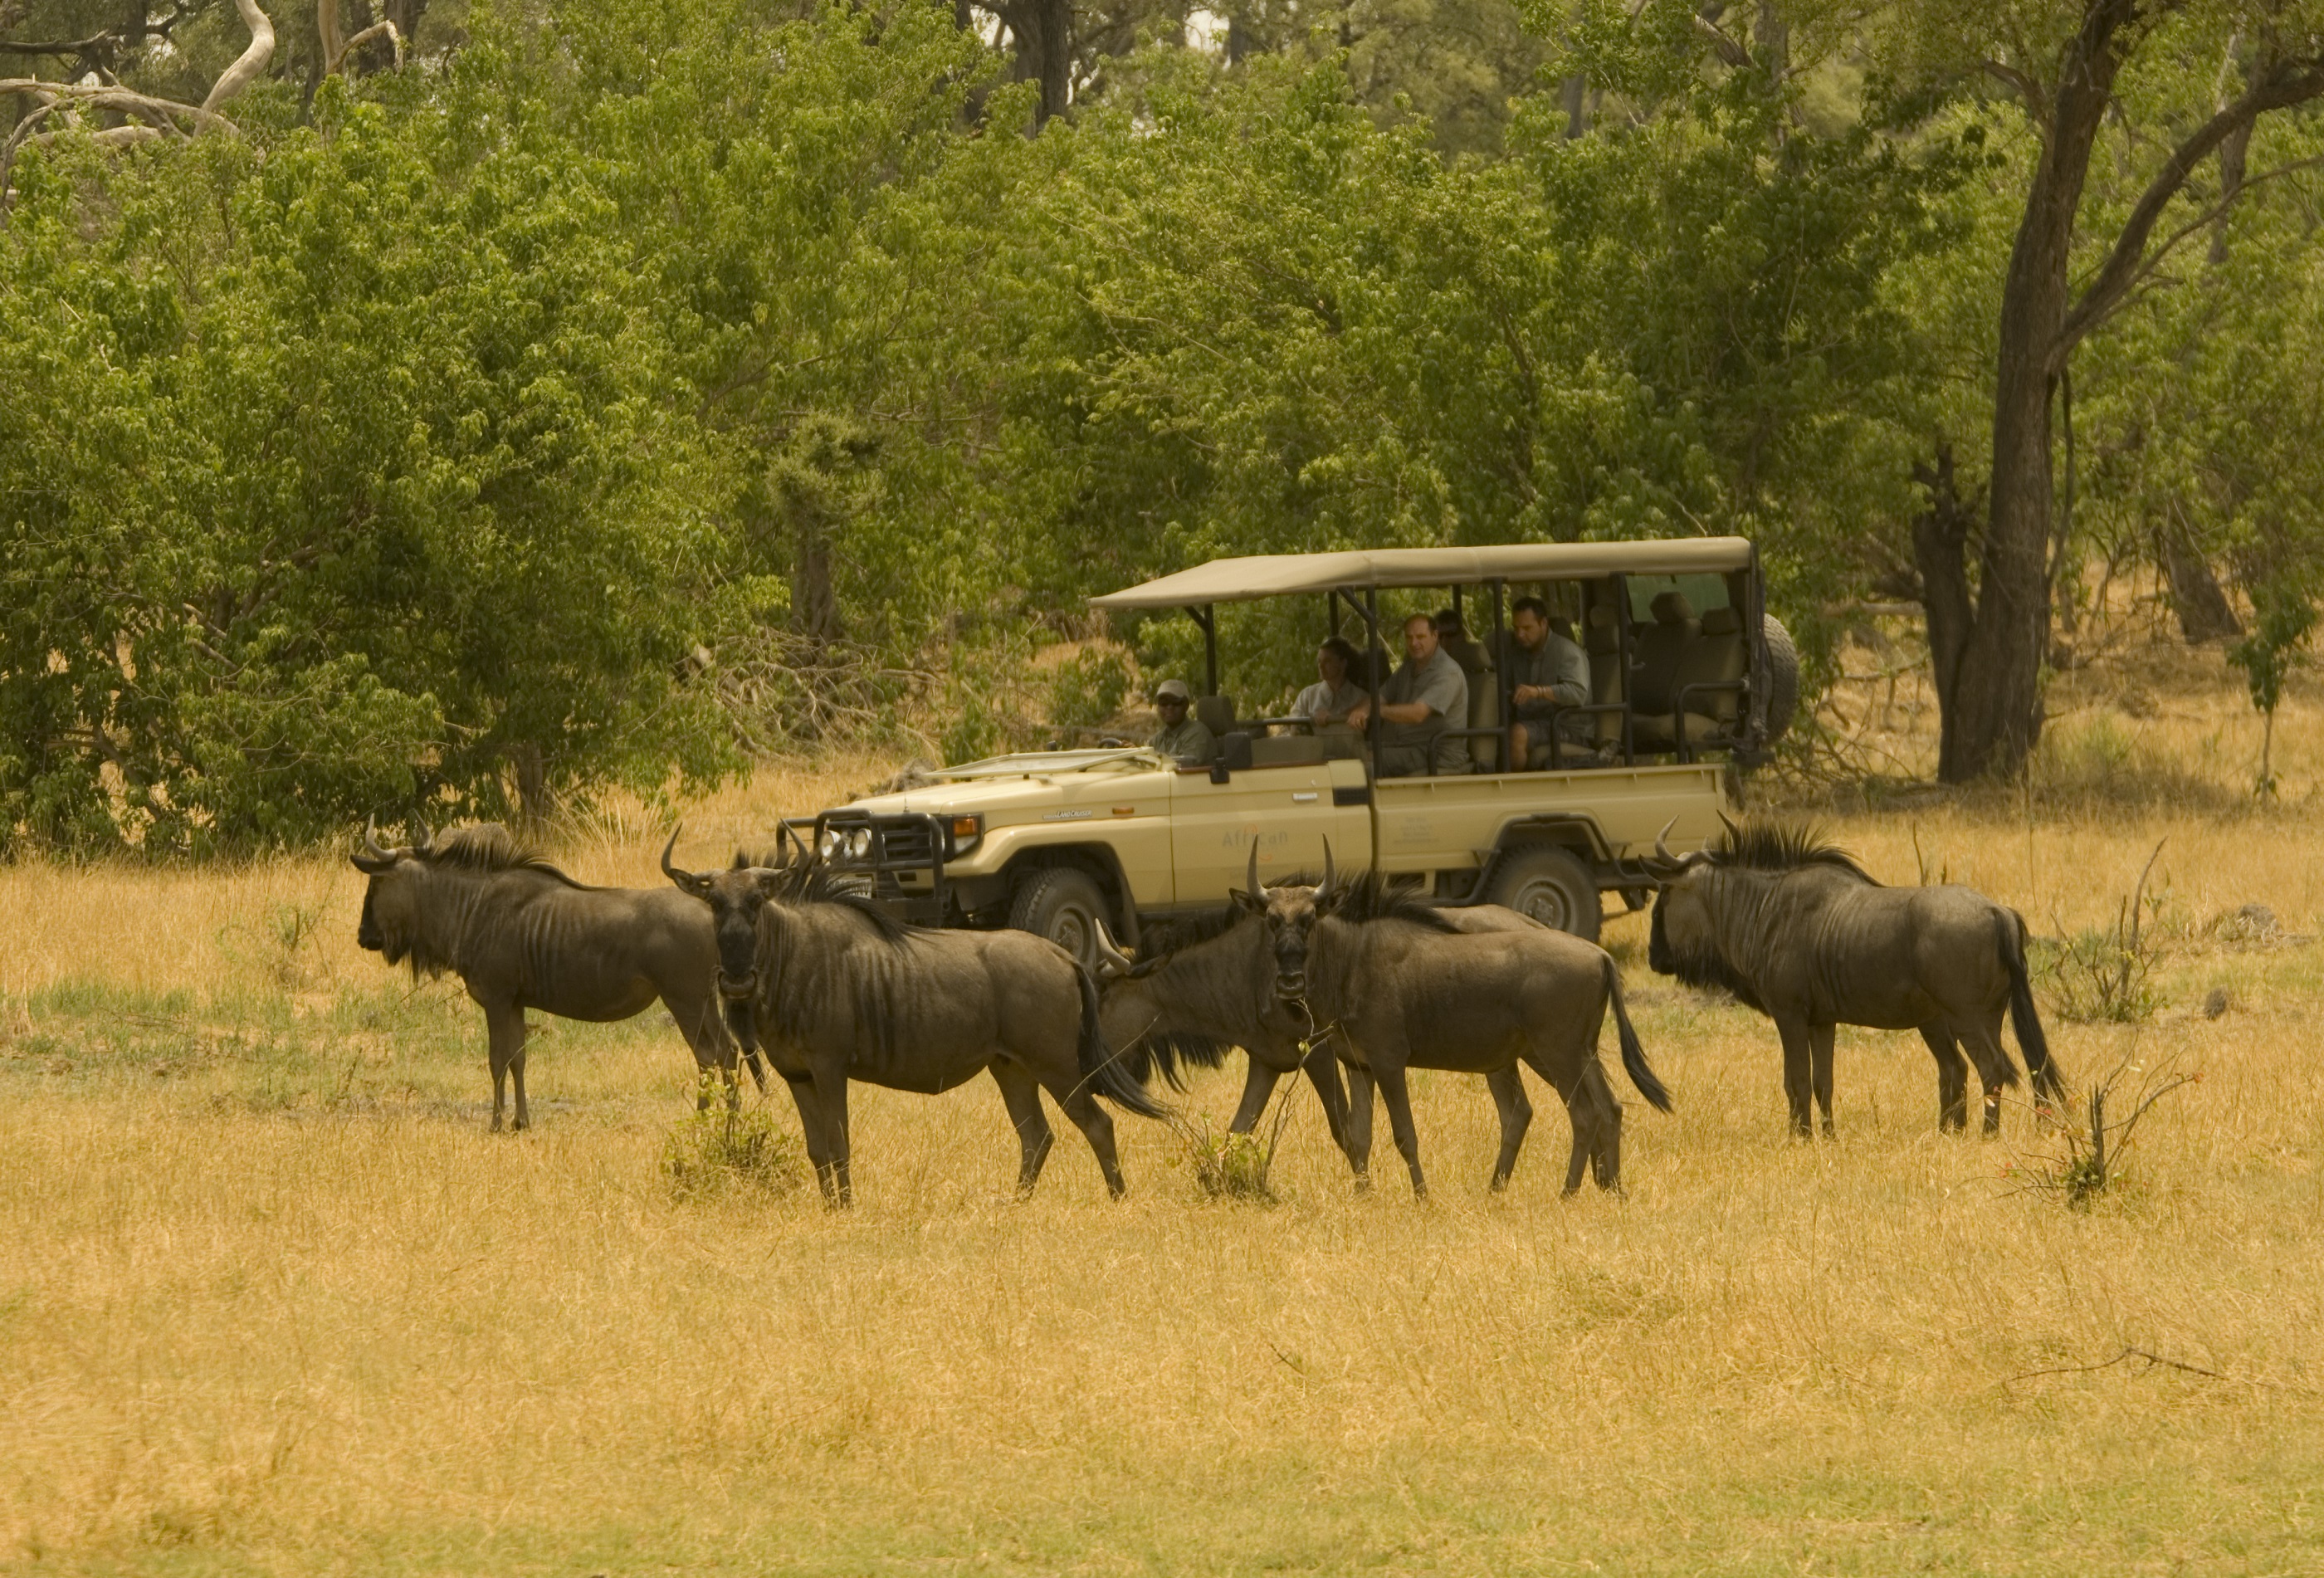 botswana or south africa safari